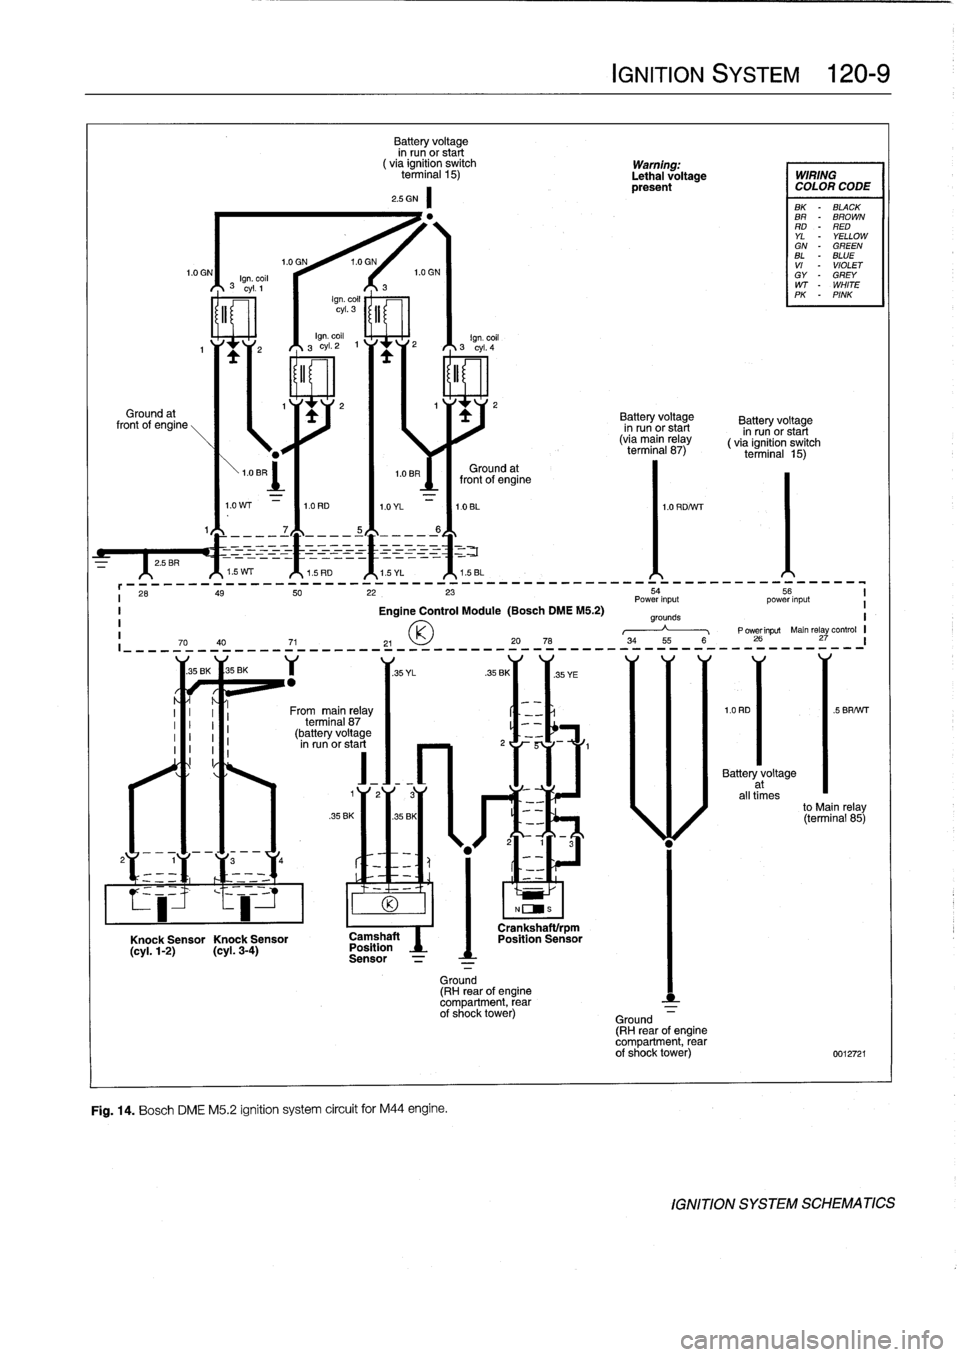 BMW 318i 1996 E36 Workshop Manual 
^1
.5WT
^1
.5RD
^1
.5YL
^1
.5BL
r

	

--__

	

____-

	

__-_

	

___-_

	

-___-_____--__--

	

-____-___

	

____-
i
26
g
5022
23

	

54

	

5

I

	

Power
input

	

power
input
I

	

Engine
Contro